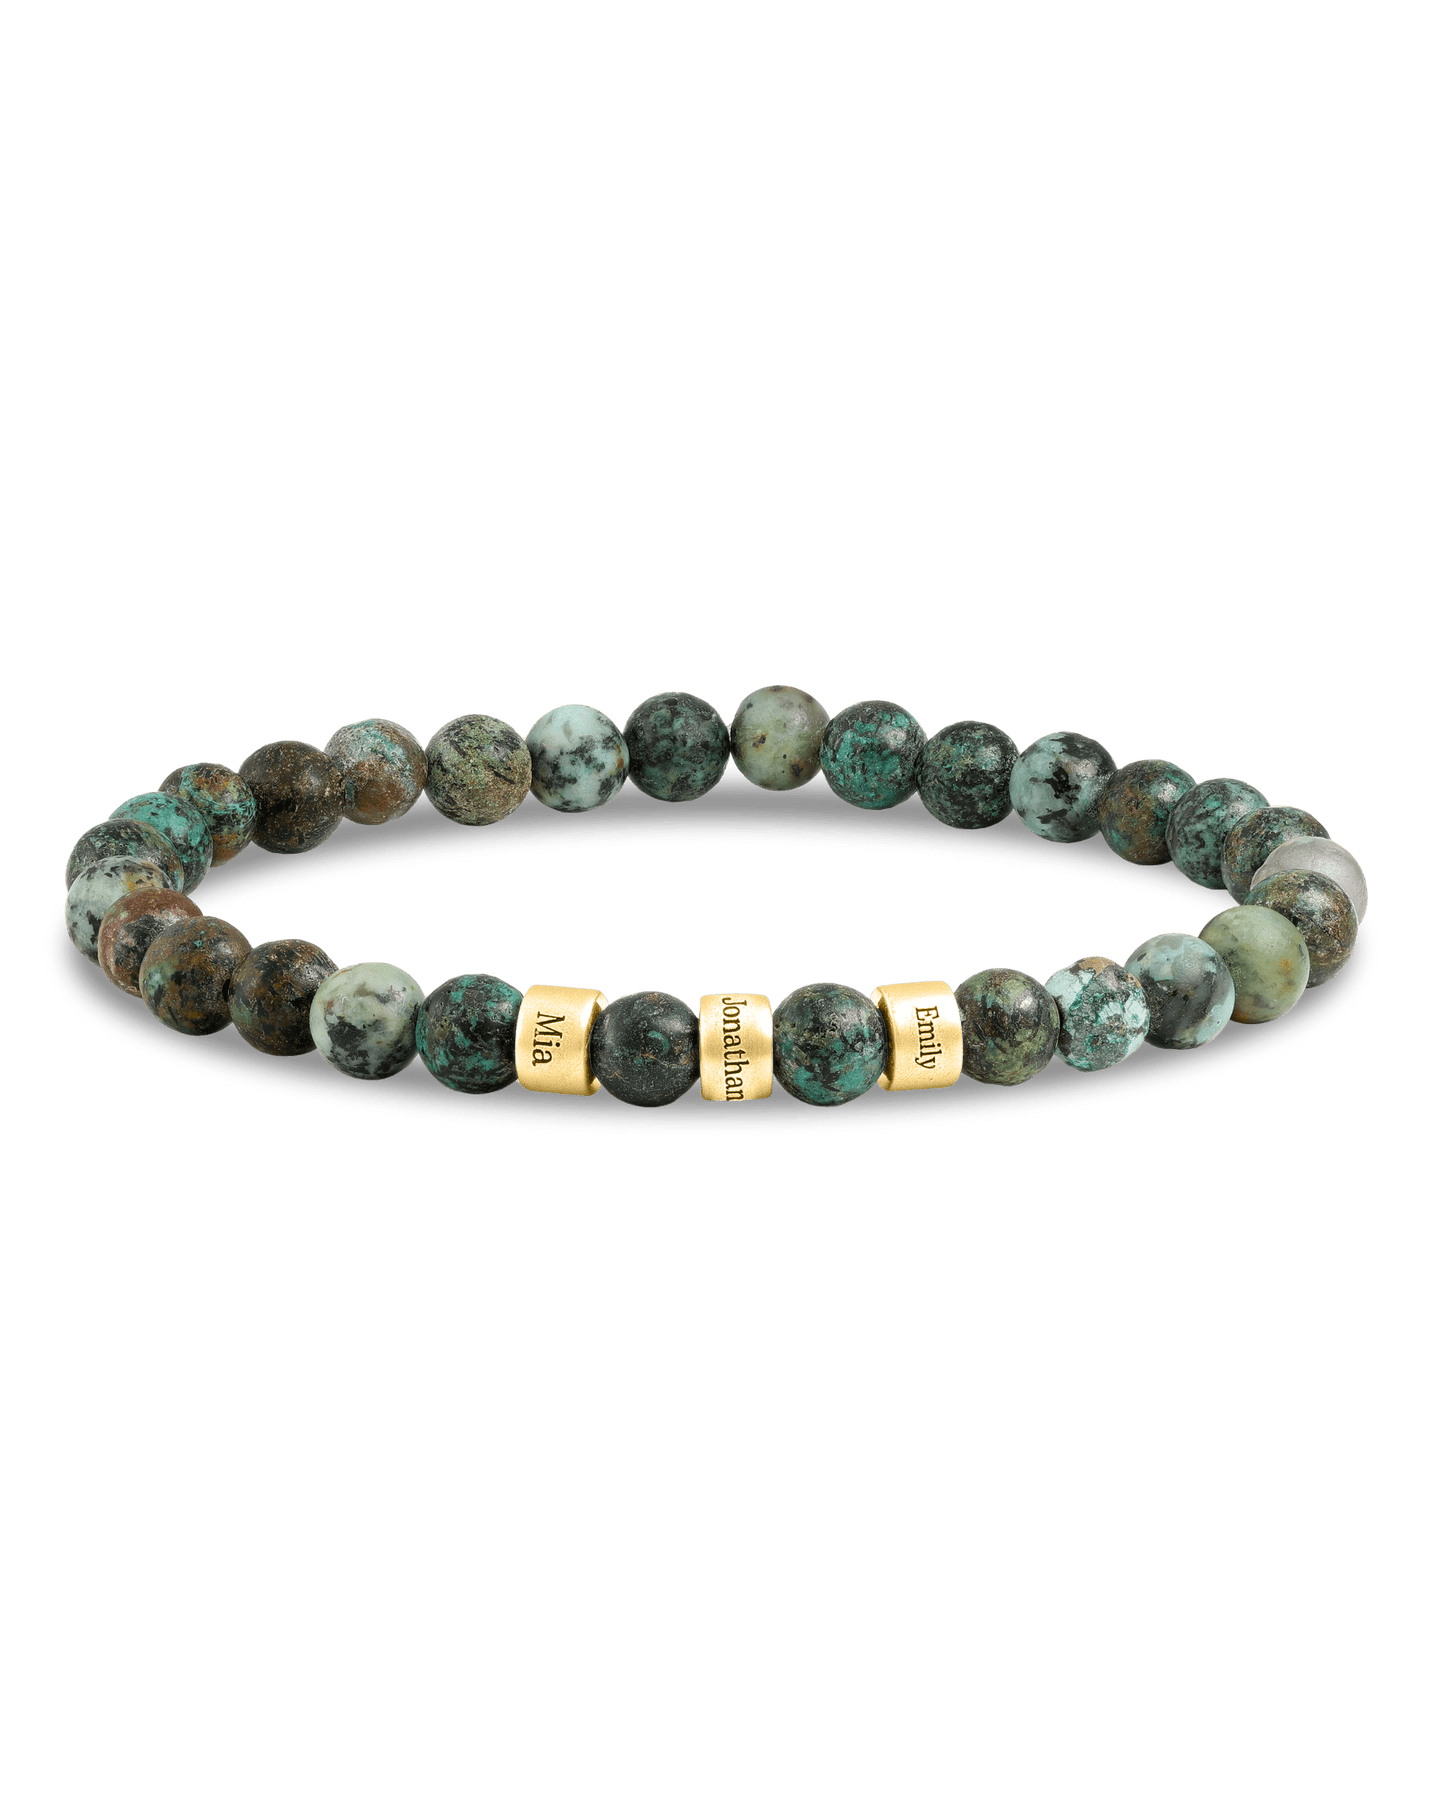 Dad's Legacy Beads Bracelet w/ Turquoise Stones - 925 Sterling Silver Bracelets magal-dev 